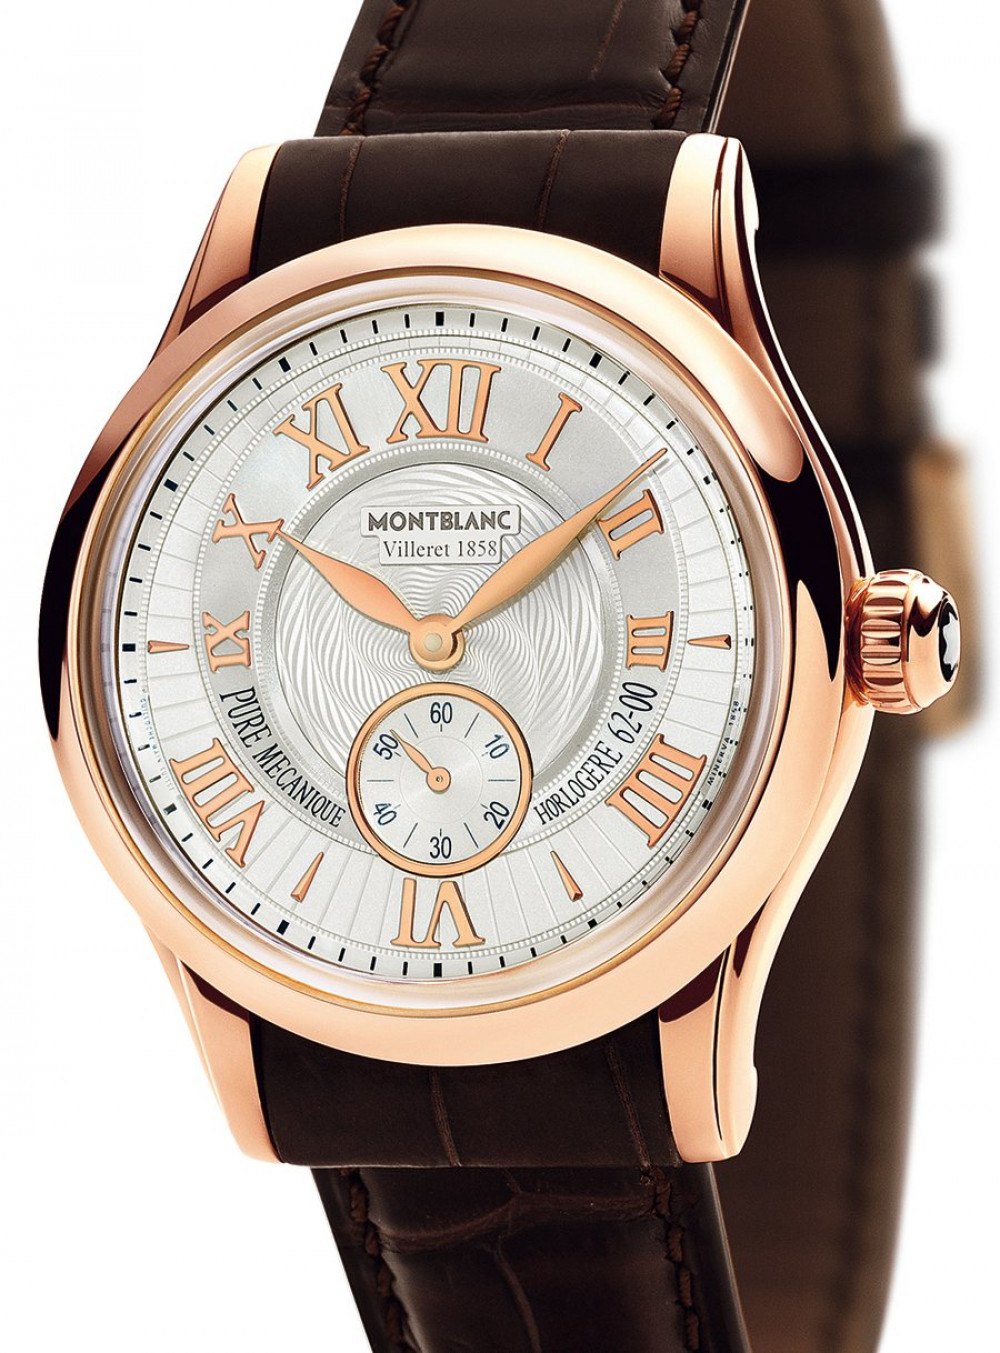 Zegarek firmy Montblanc, model Grande Seconde Authentique